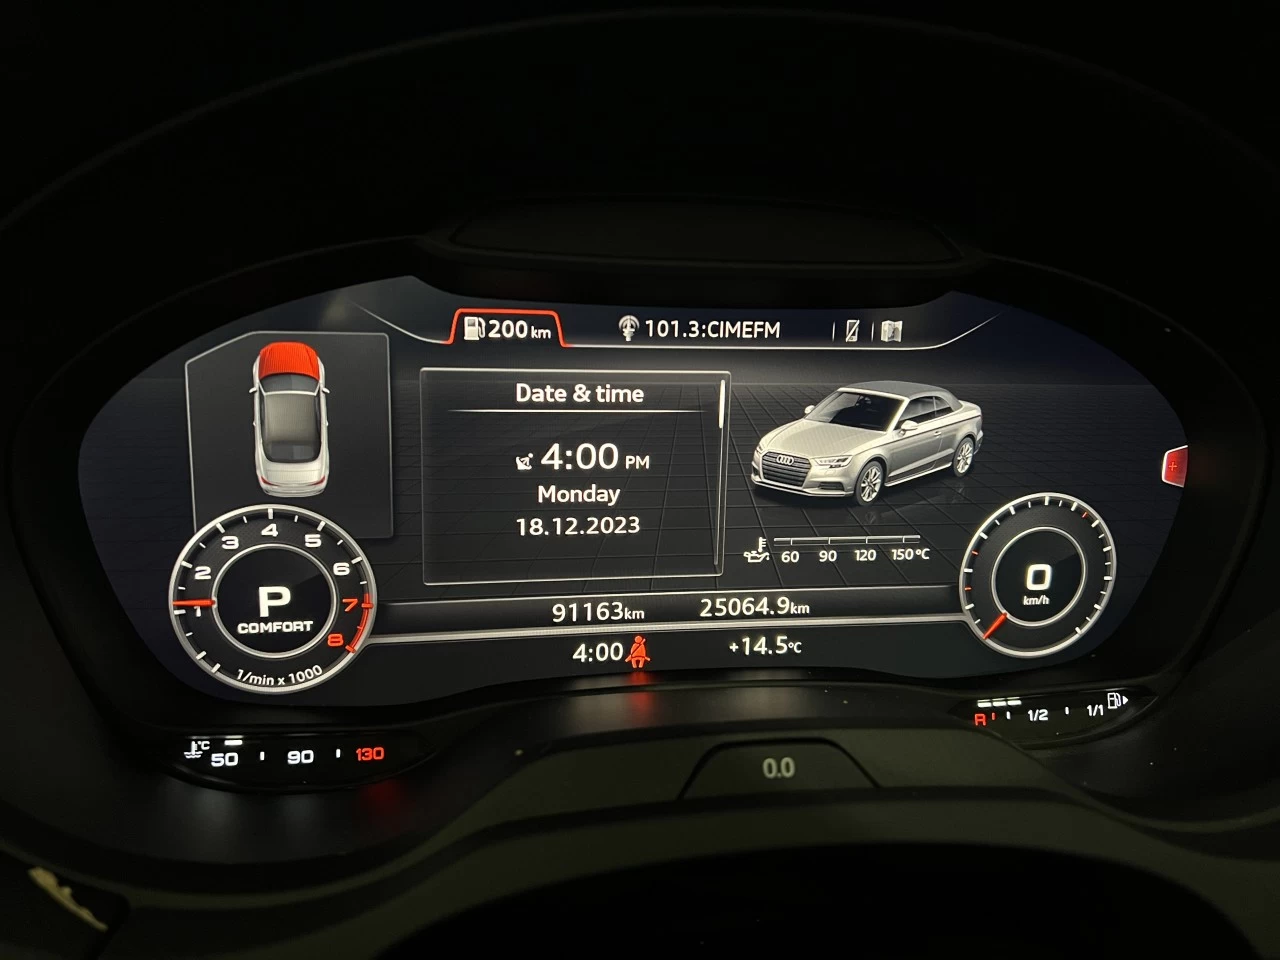 2019 Audi A3 Technik Main Image